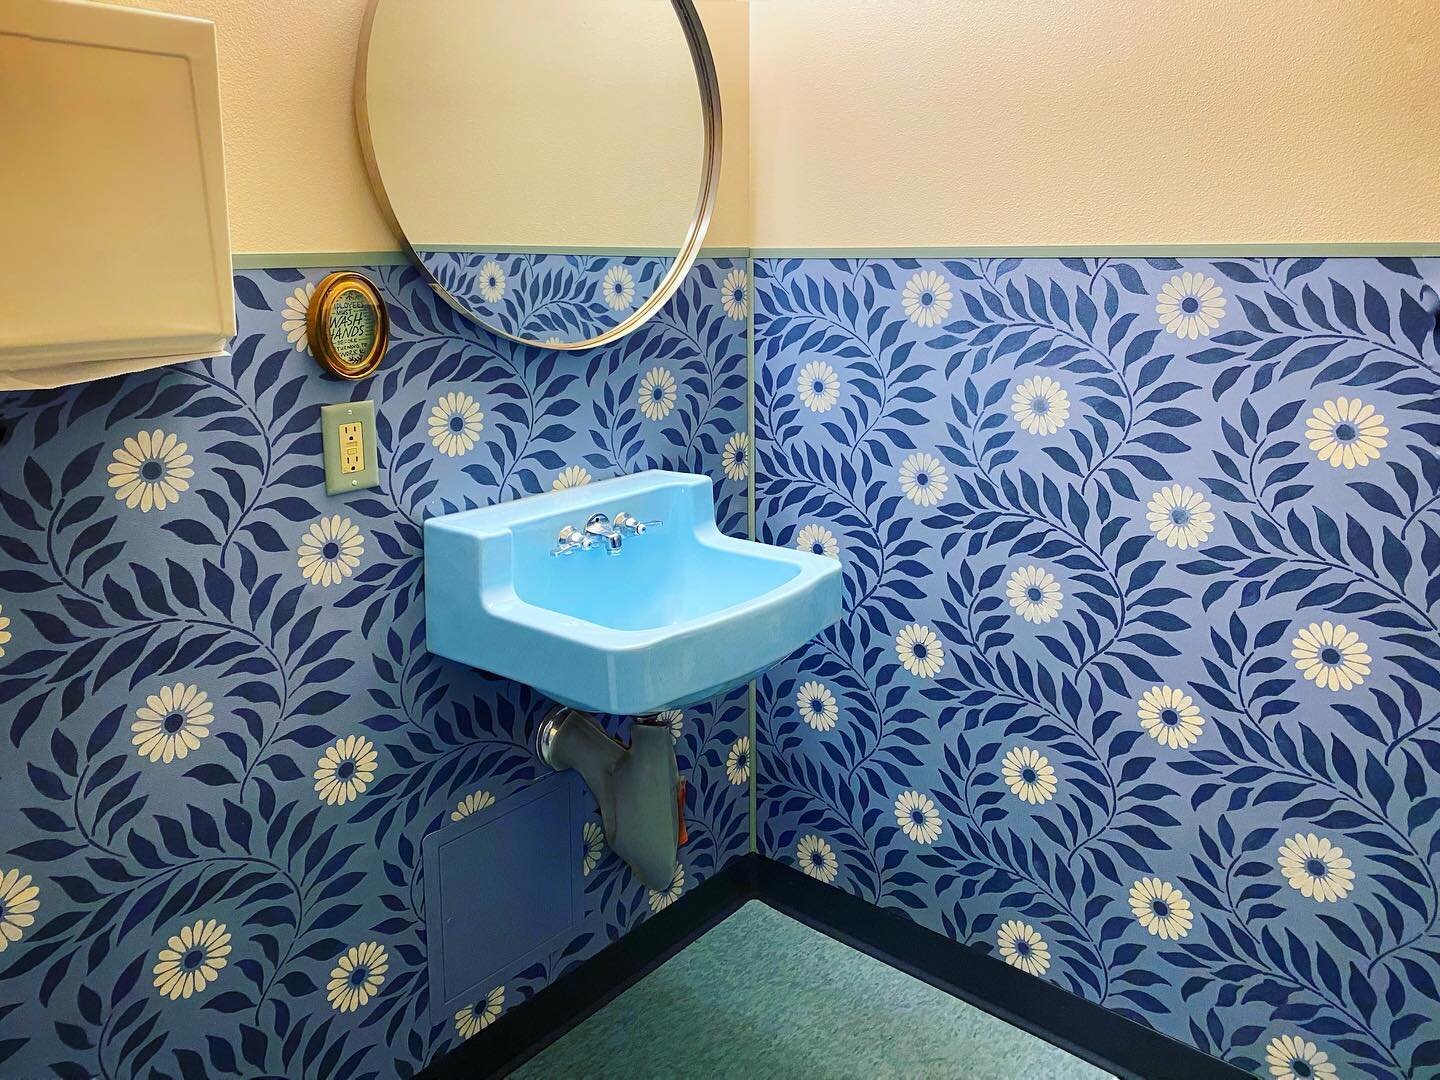 One more shot of my favorite blue-themed restroom. 
#restroomdecor #interiordesign #wallpaper #blueporcelain #blue #bluesink #floralwallpaper #coffeeshop #cafeculture #pattern #floralpattern #iphone11 #snapseed